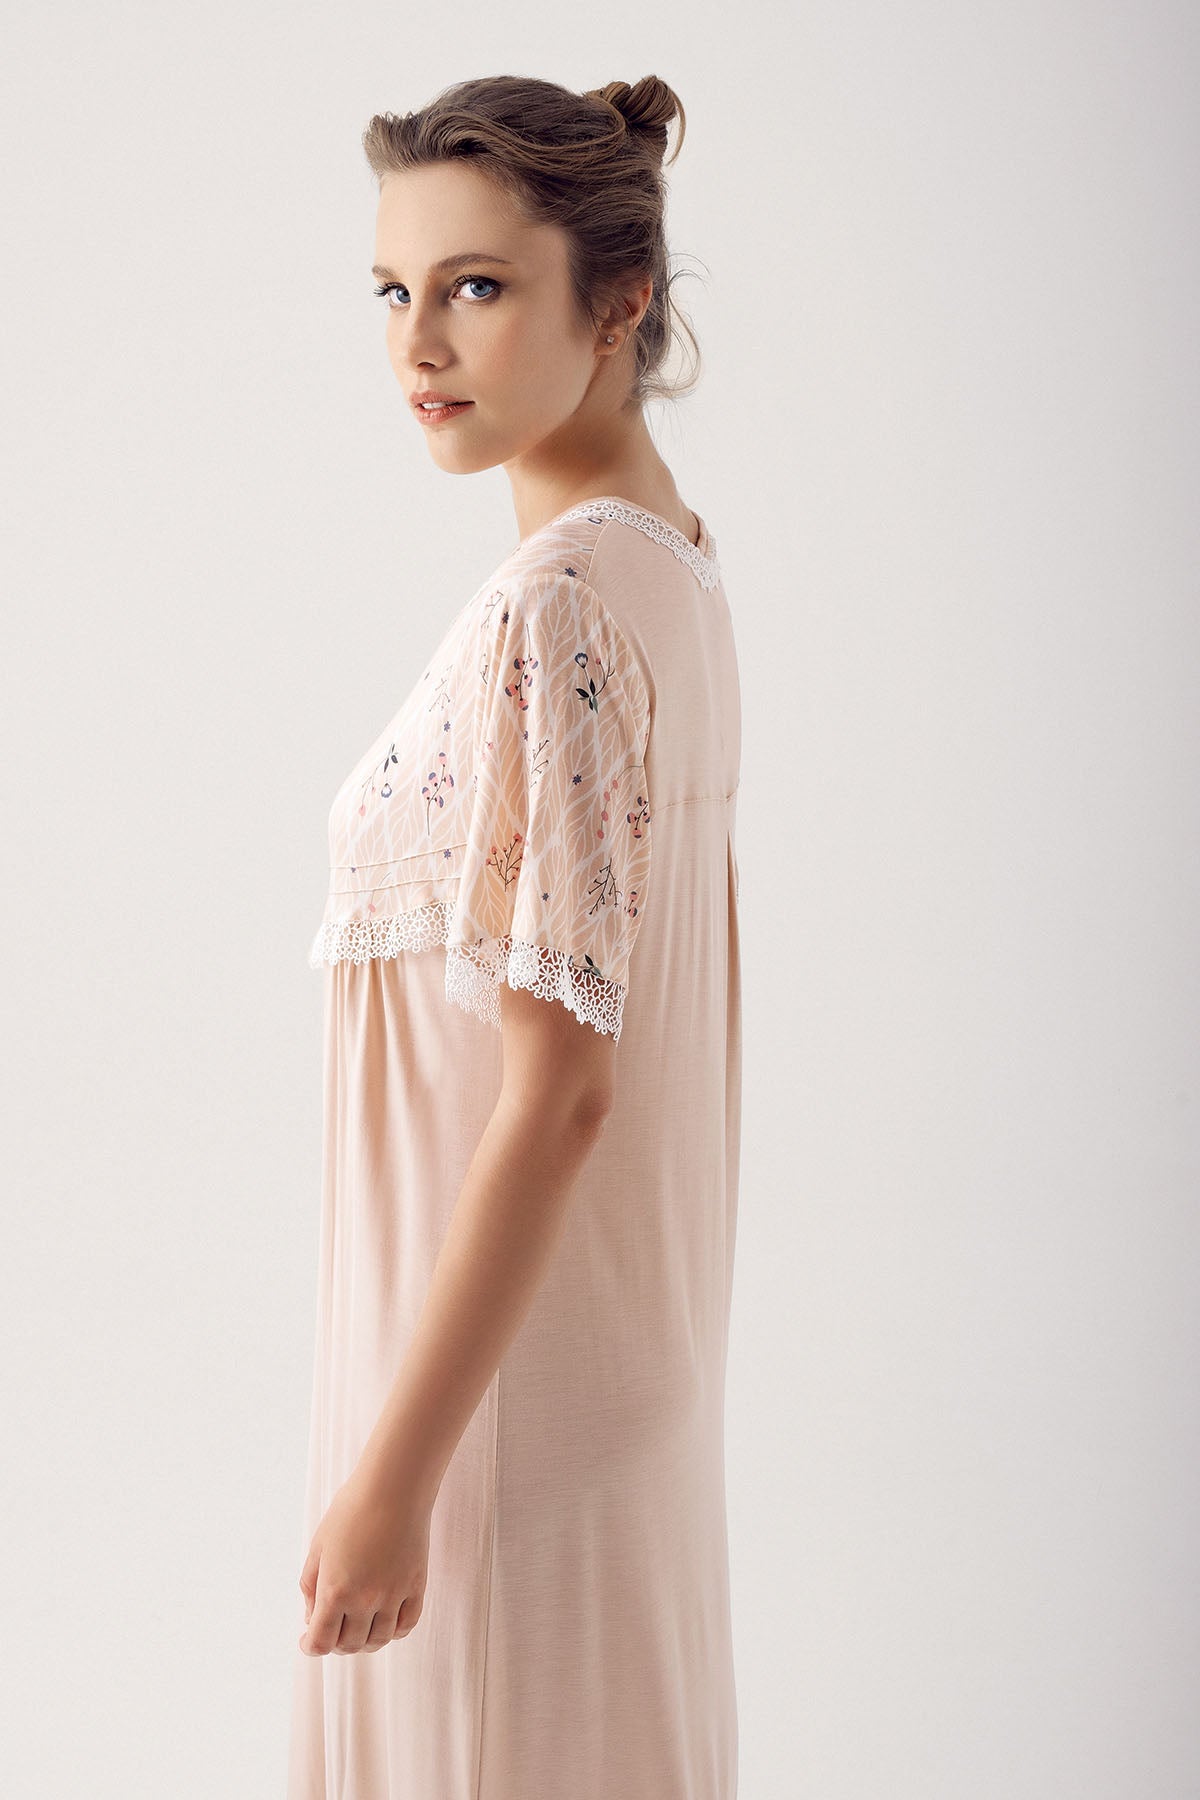 Shopymommy 14125 Lace Flower Pattern Maternity & Nursing Nightgown Beige